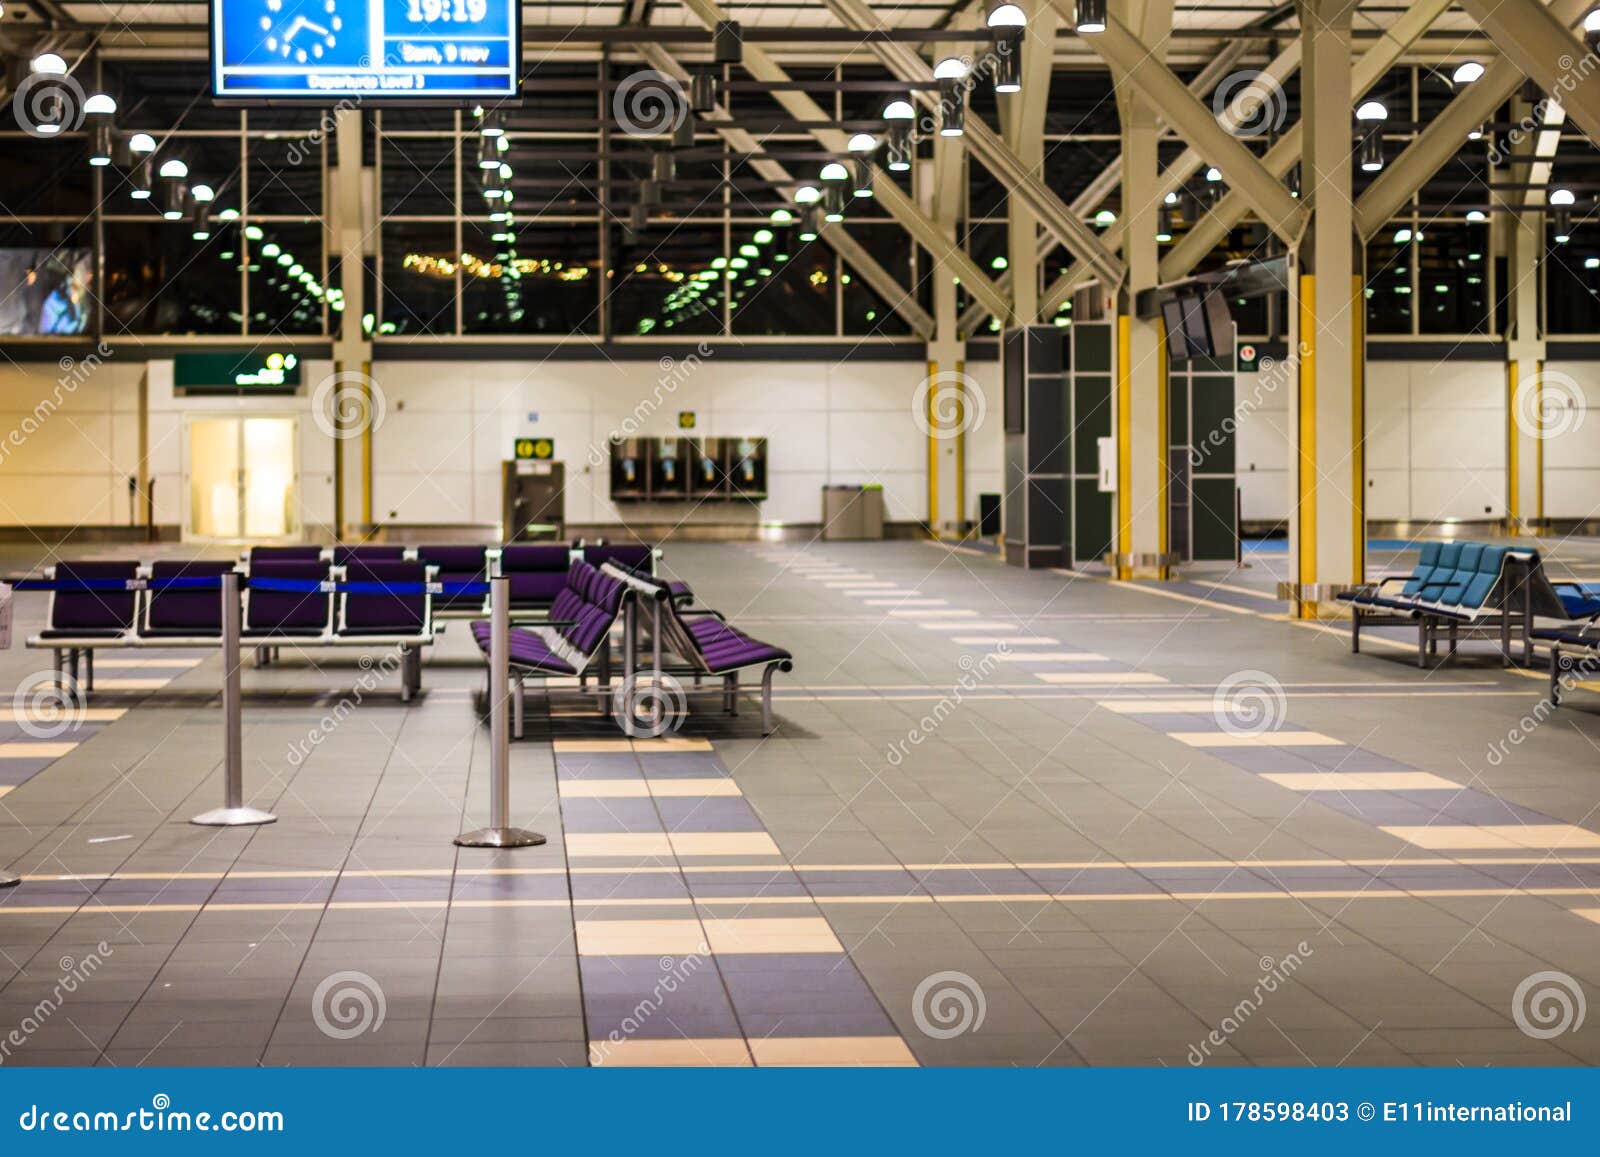 airport terminal checkin gate waiting area